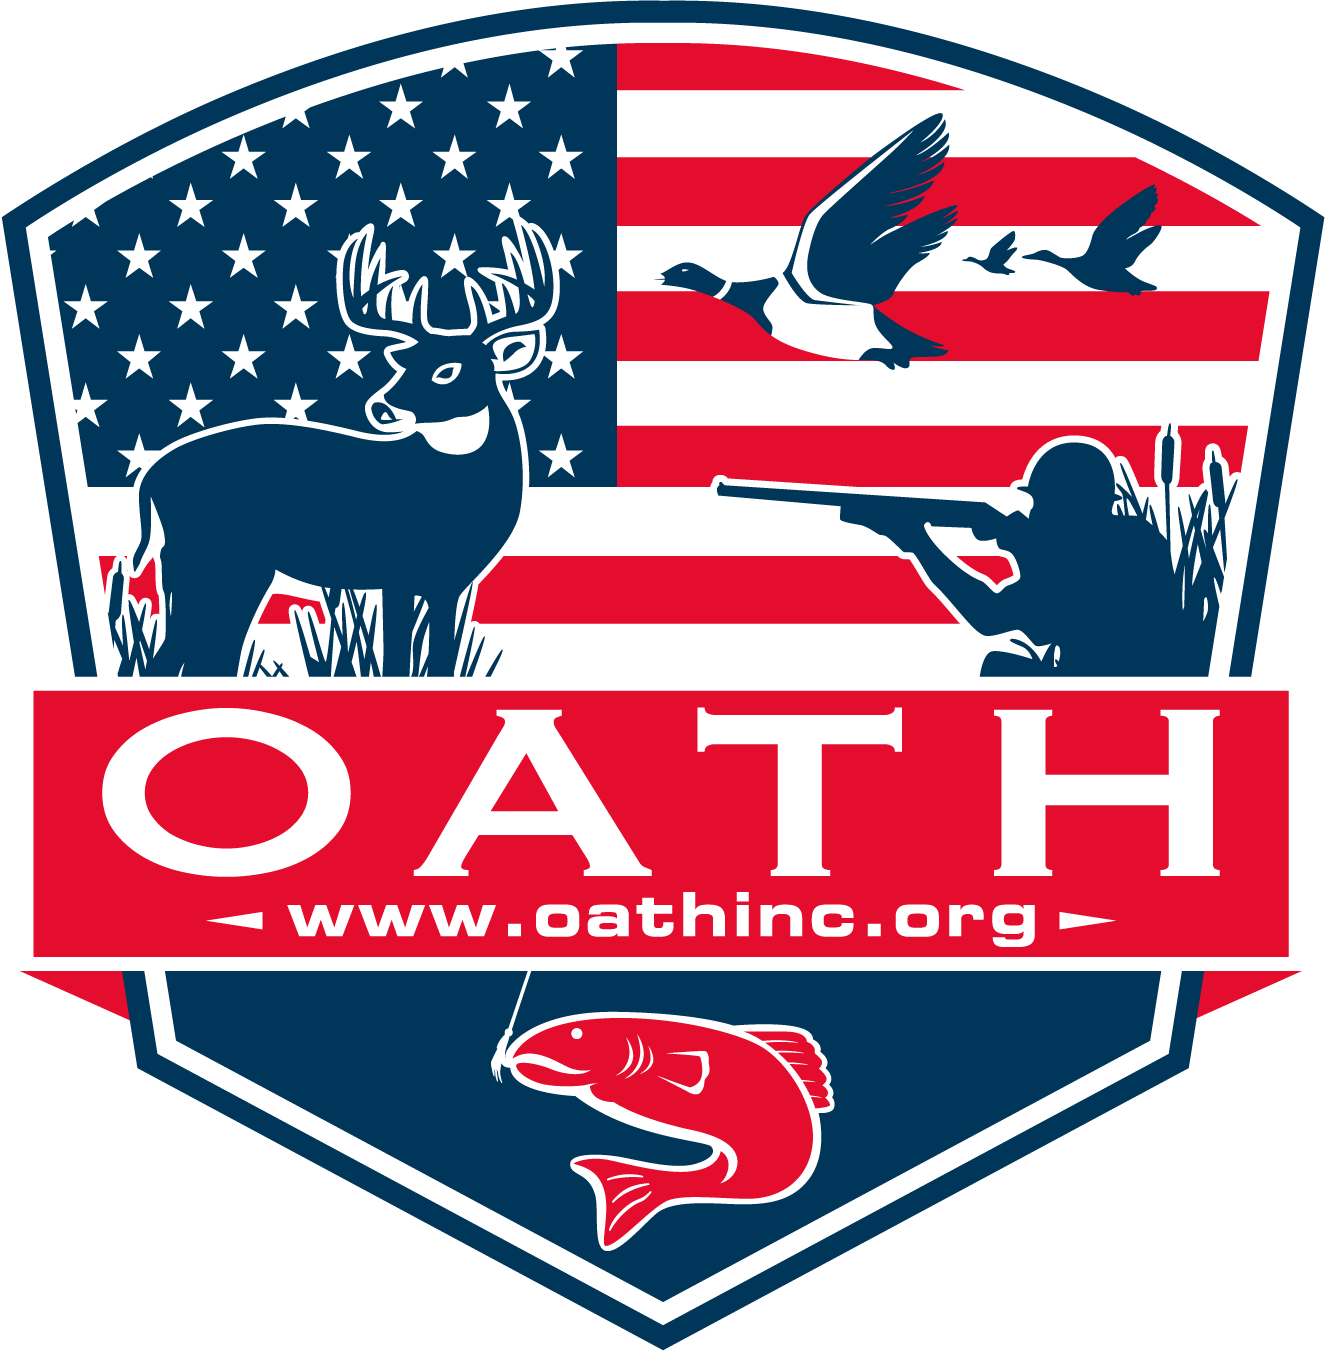 Oath inc logo